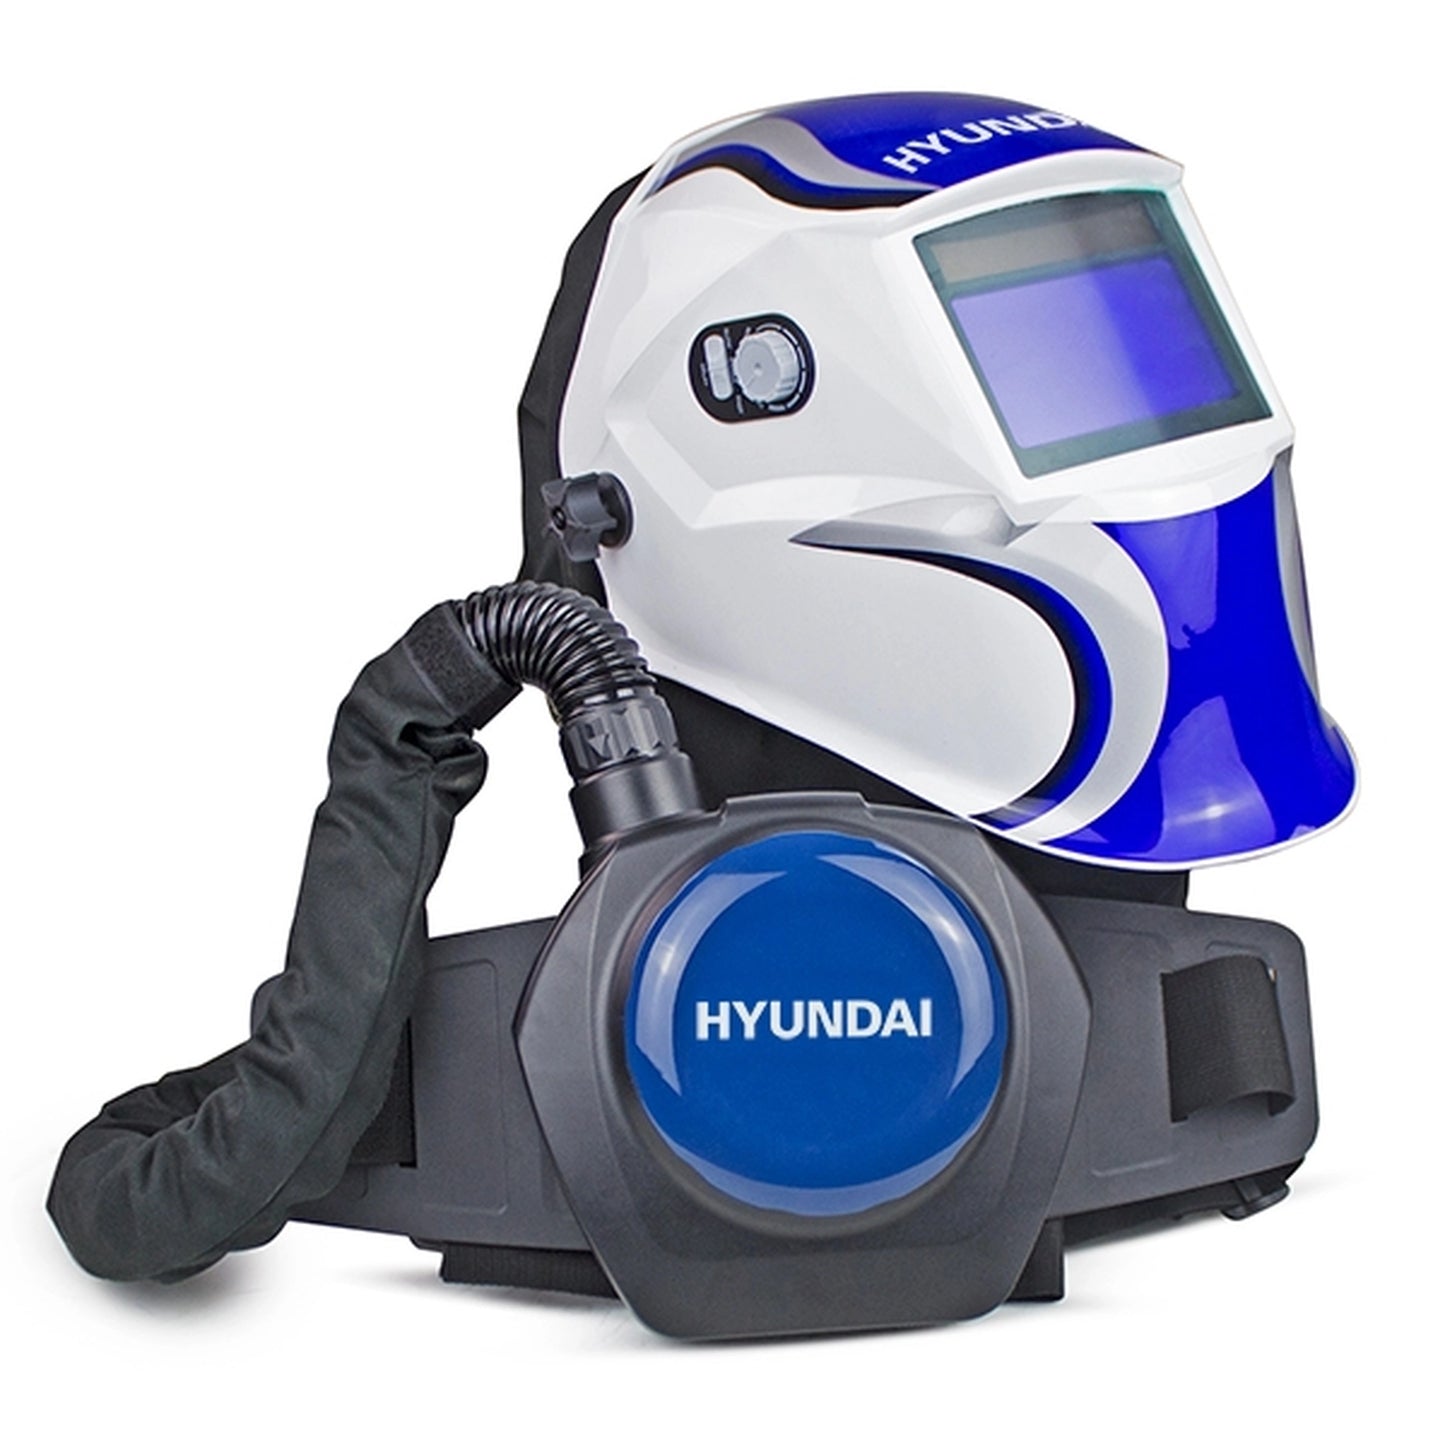 Hyundai HYWH-850RM Professional Auto-Darkening Air Fed Welding Helmet